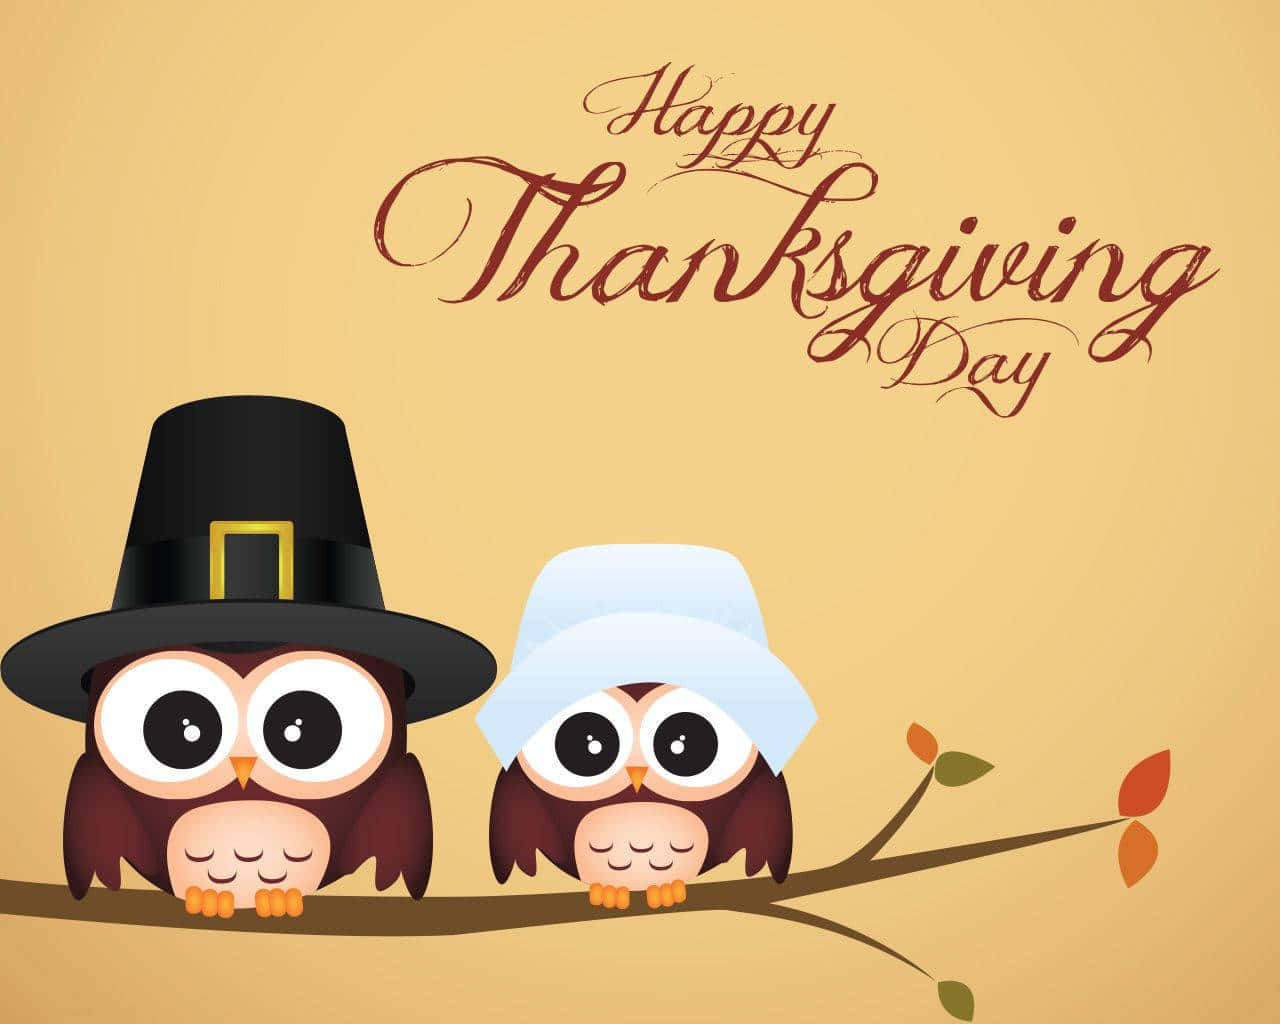 Cartoon Thanksgiving Owls With A Message Wallpaper